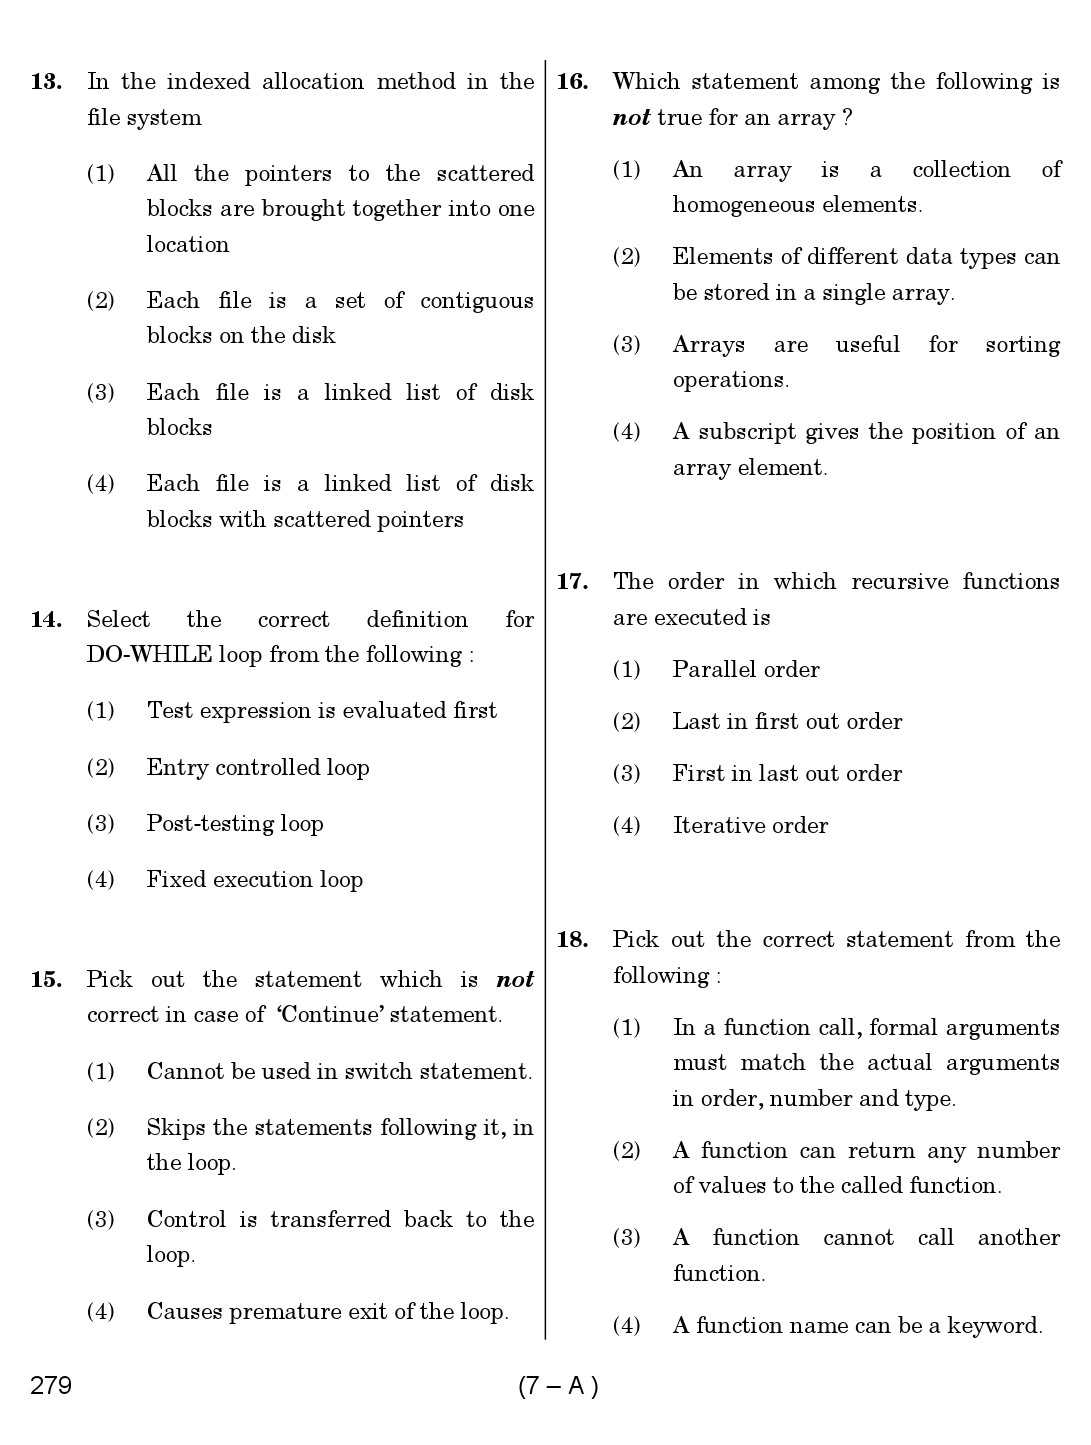 Karnataka PSC Computer Science Teachers Exam Sample Question Paper Subject code 279 7